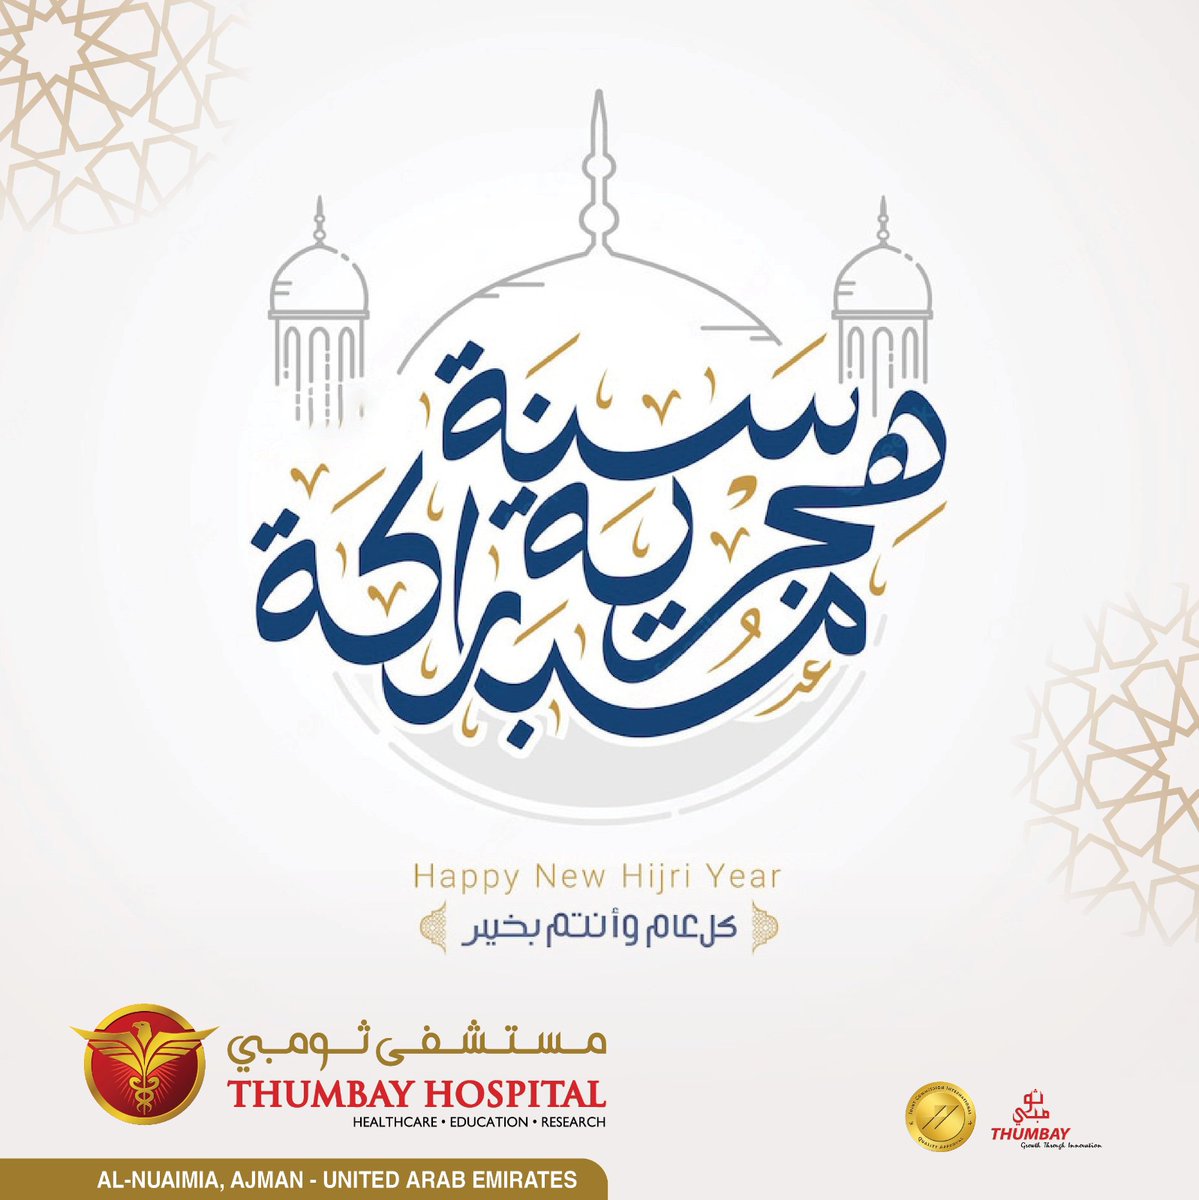 WISHING YOU ALL A HAPPY NEW HIJIRI YEAR 2023

#thumbay #thumbayhospital #ajman #sharjah #dubai #hospital #bestdoctors #uae